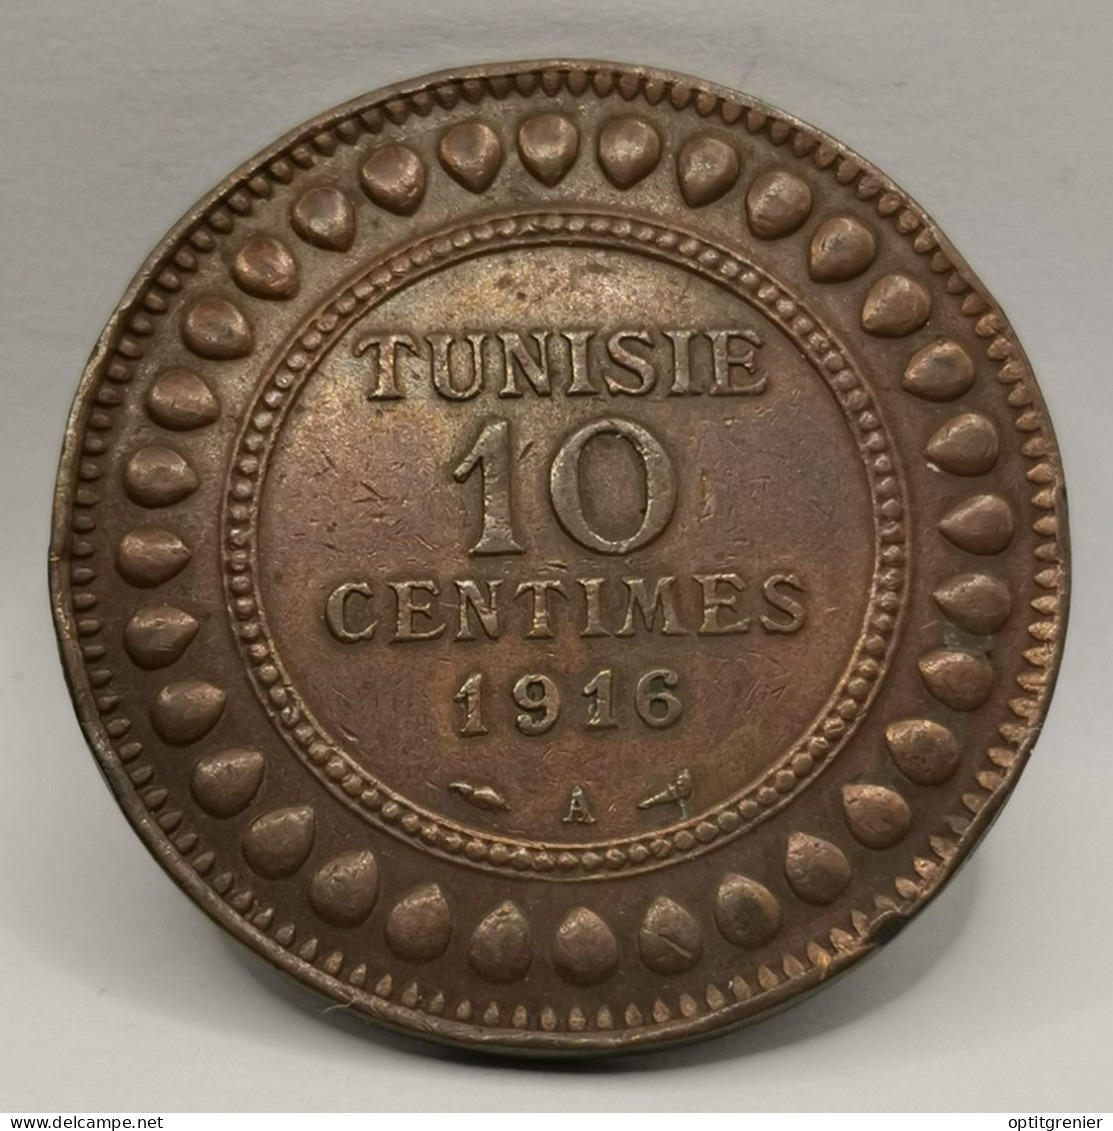 10 CENTIMES 1916 TUNISIE / TUNISIA - Tunisia